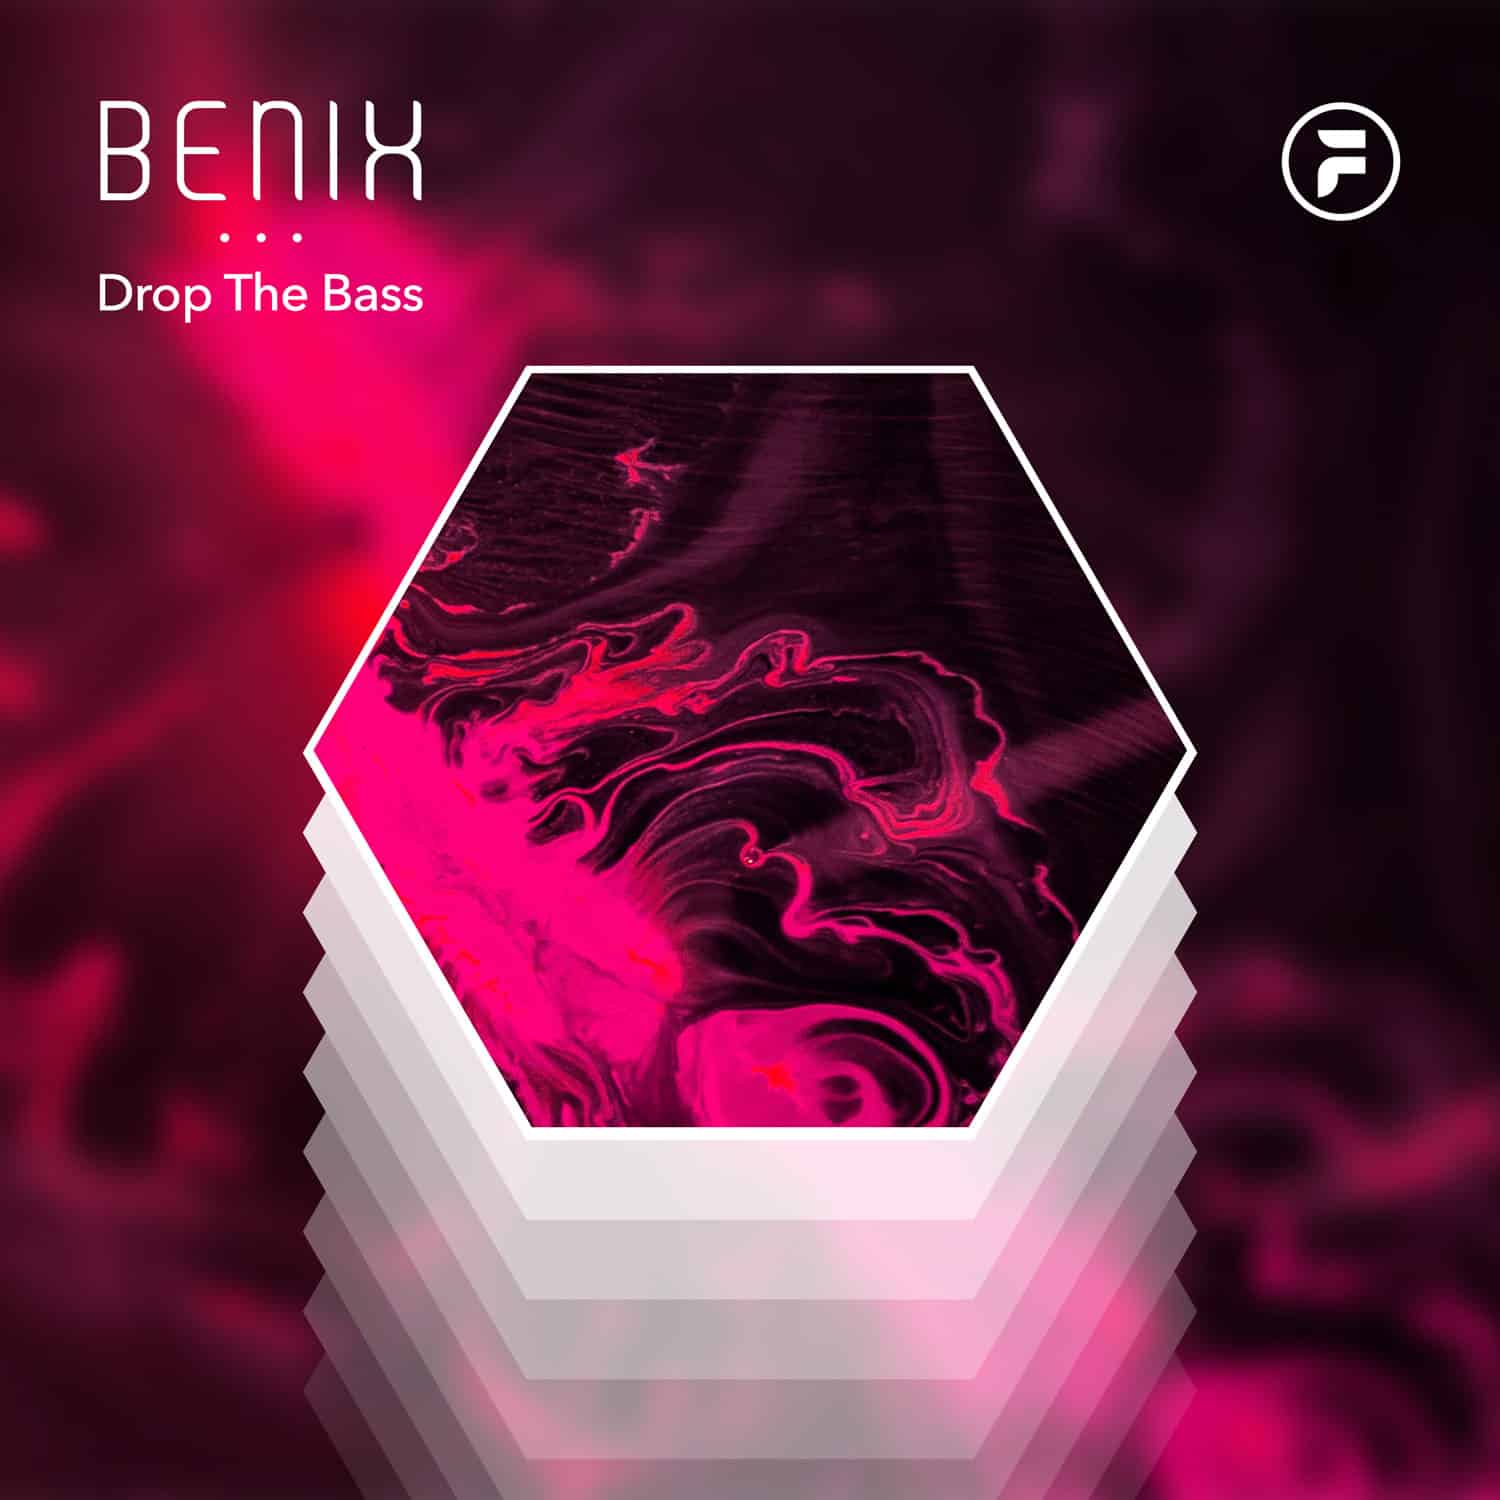 Benix - drop the bass.